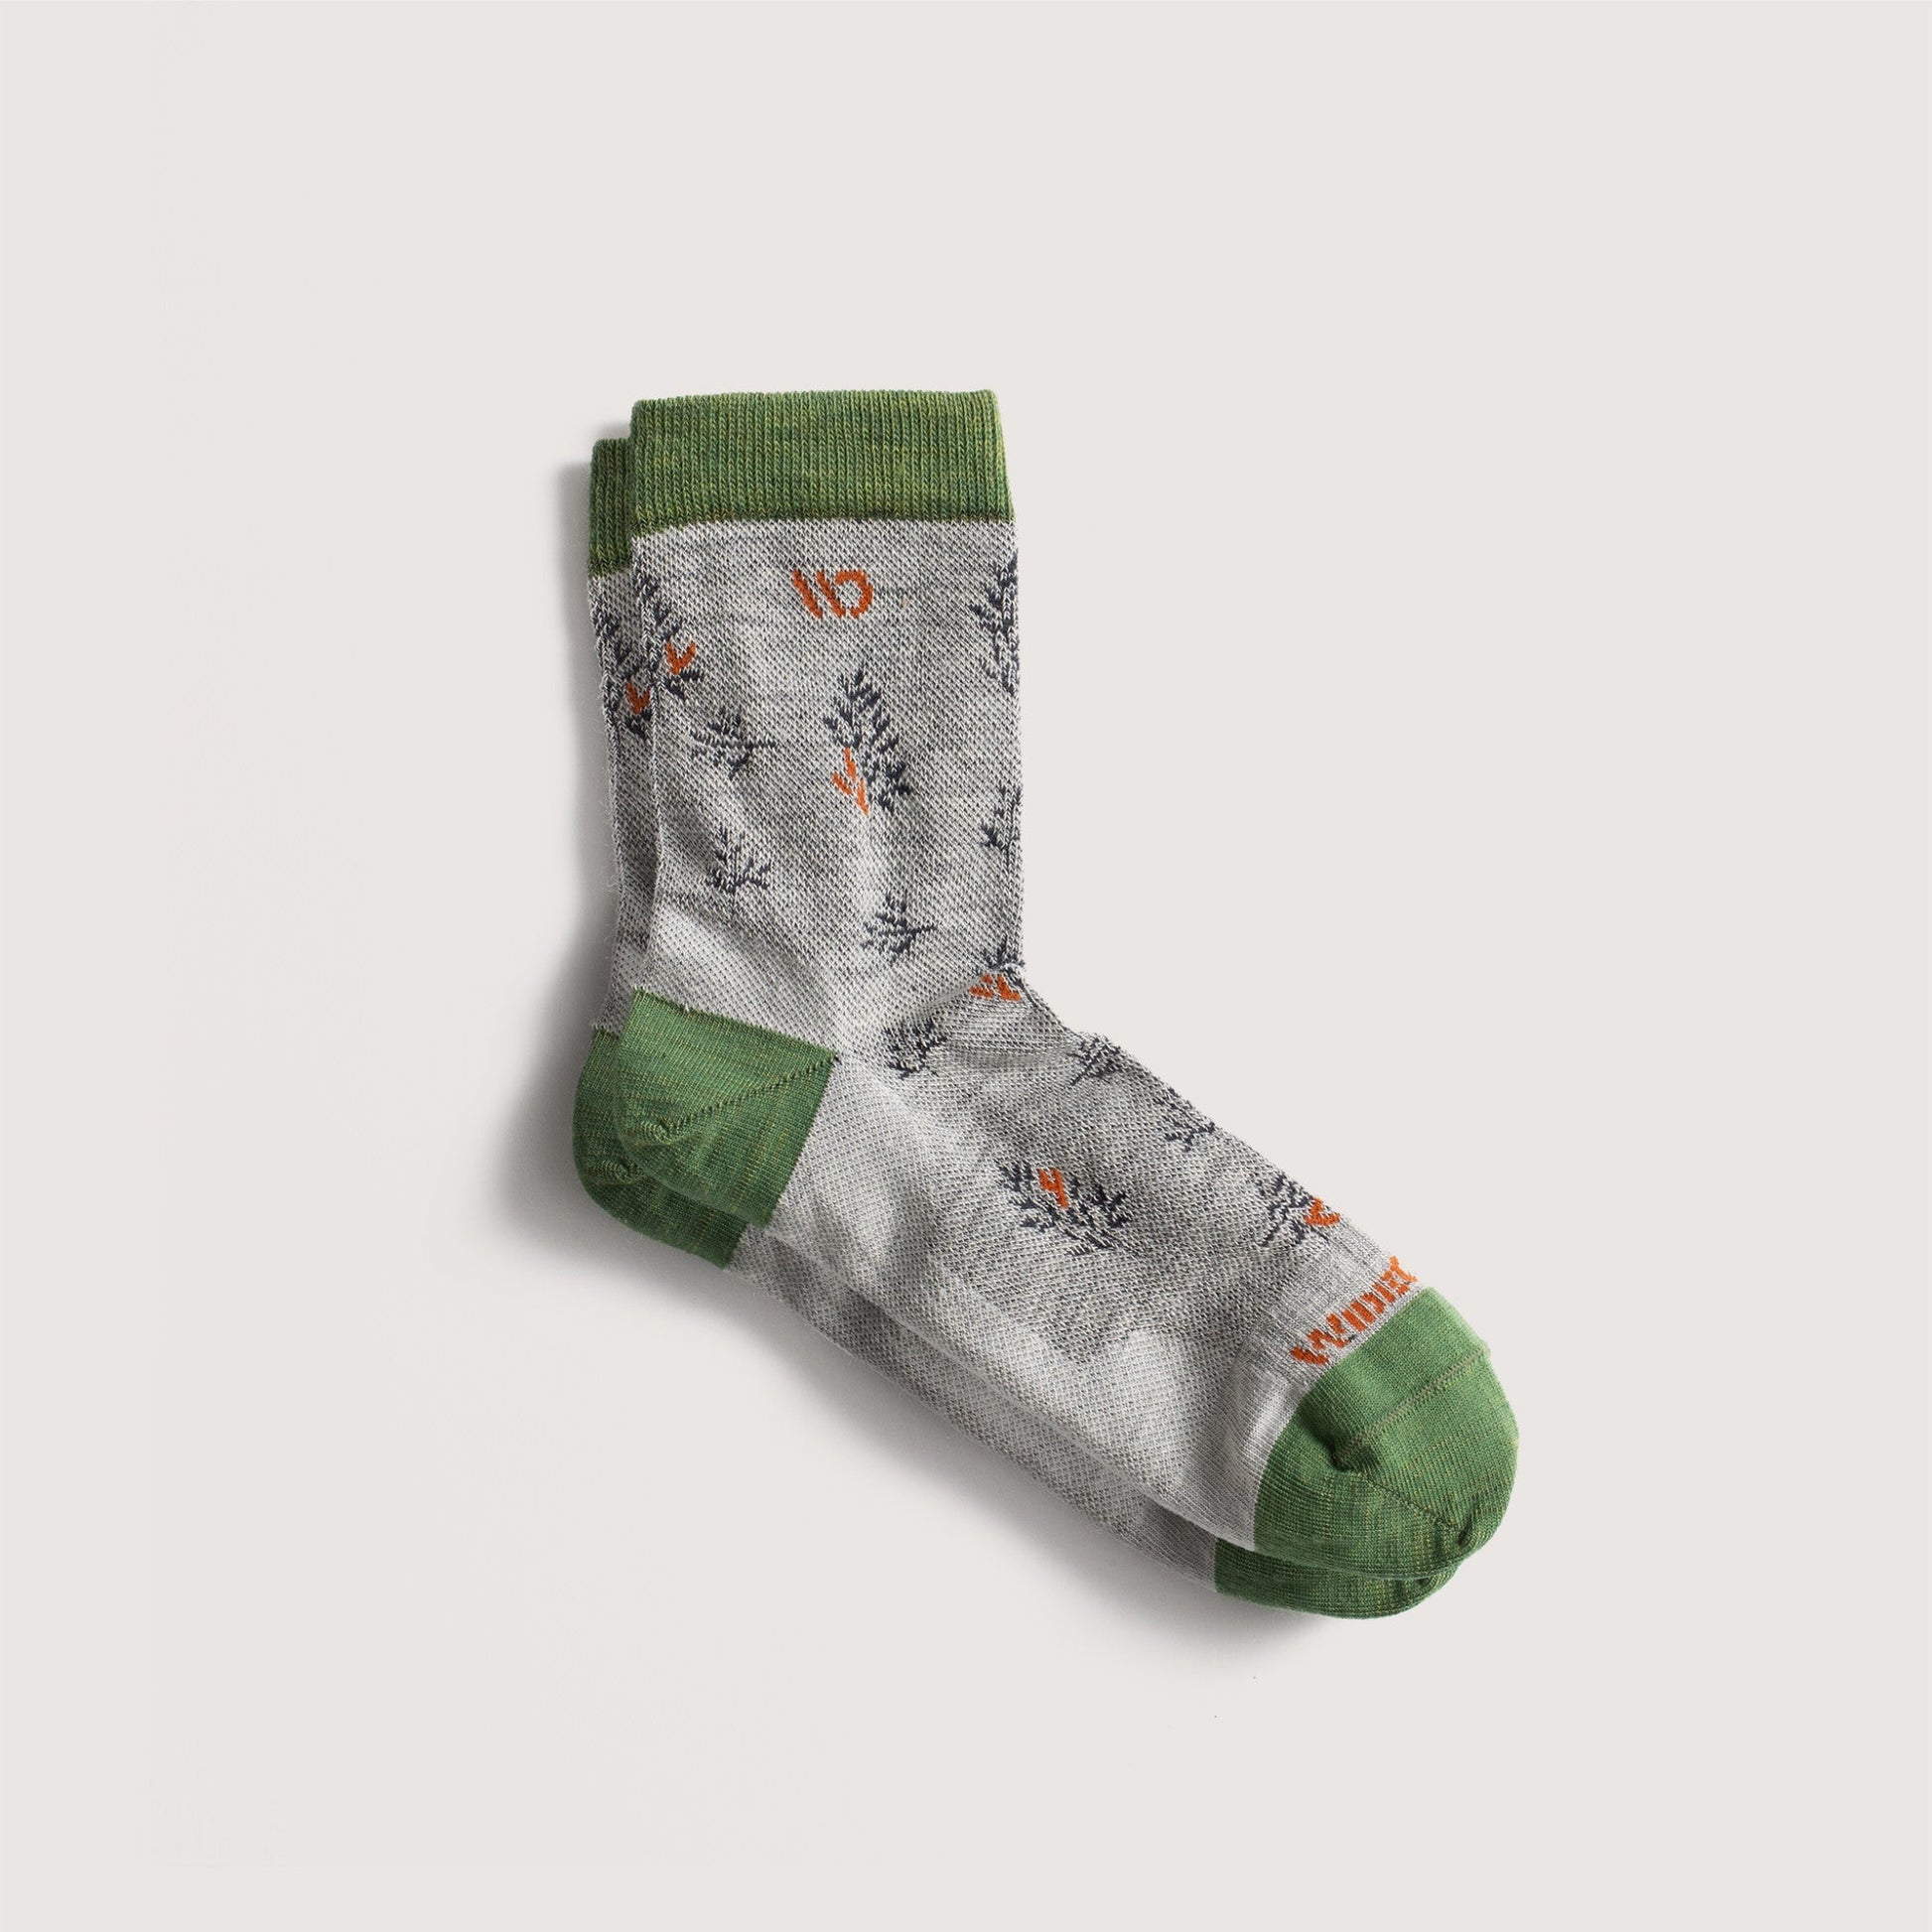 Flat socks featuring green toe, light gray body, orange logo and navy detail --Light Gray/Denim